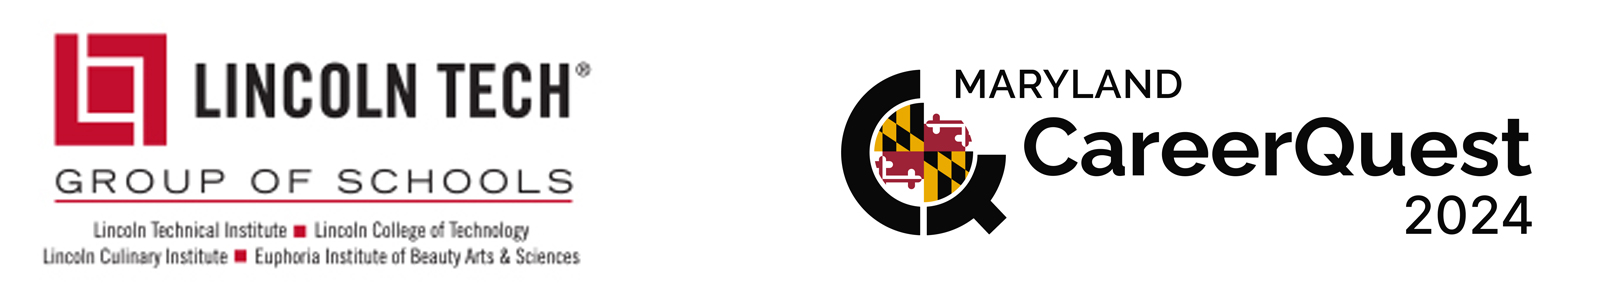 Maryland CareerQuest